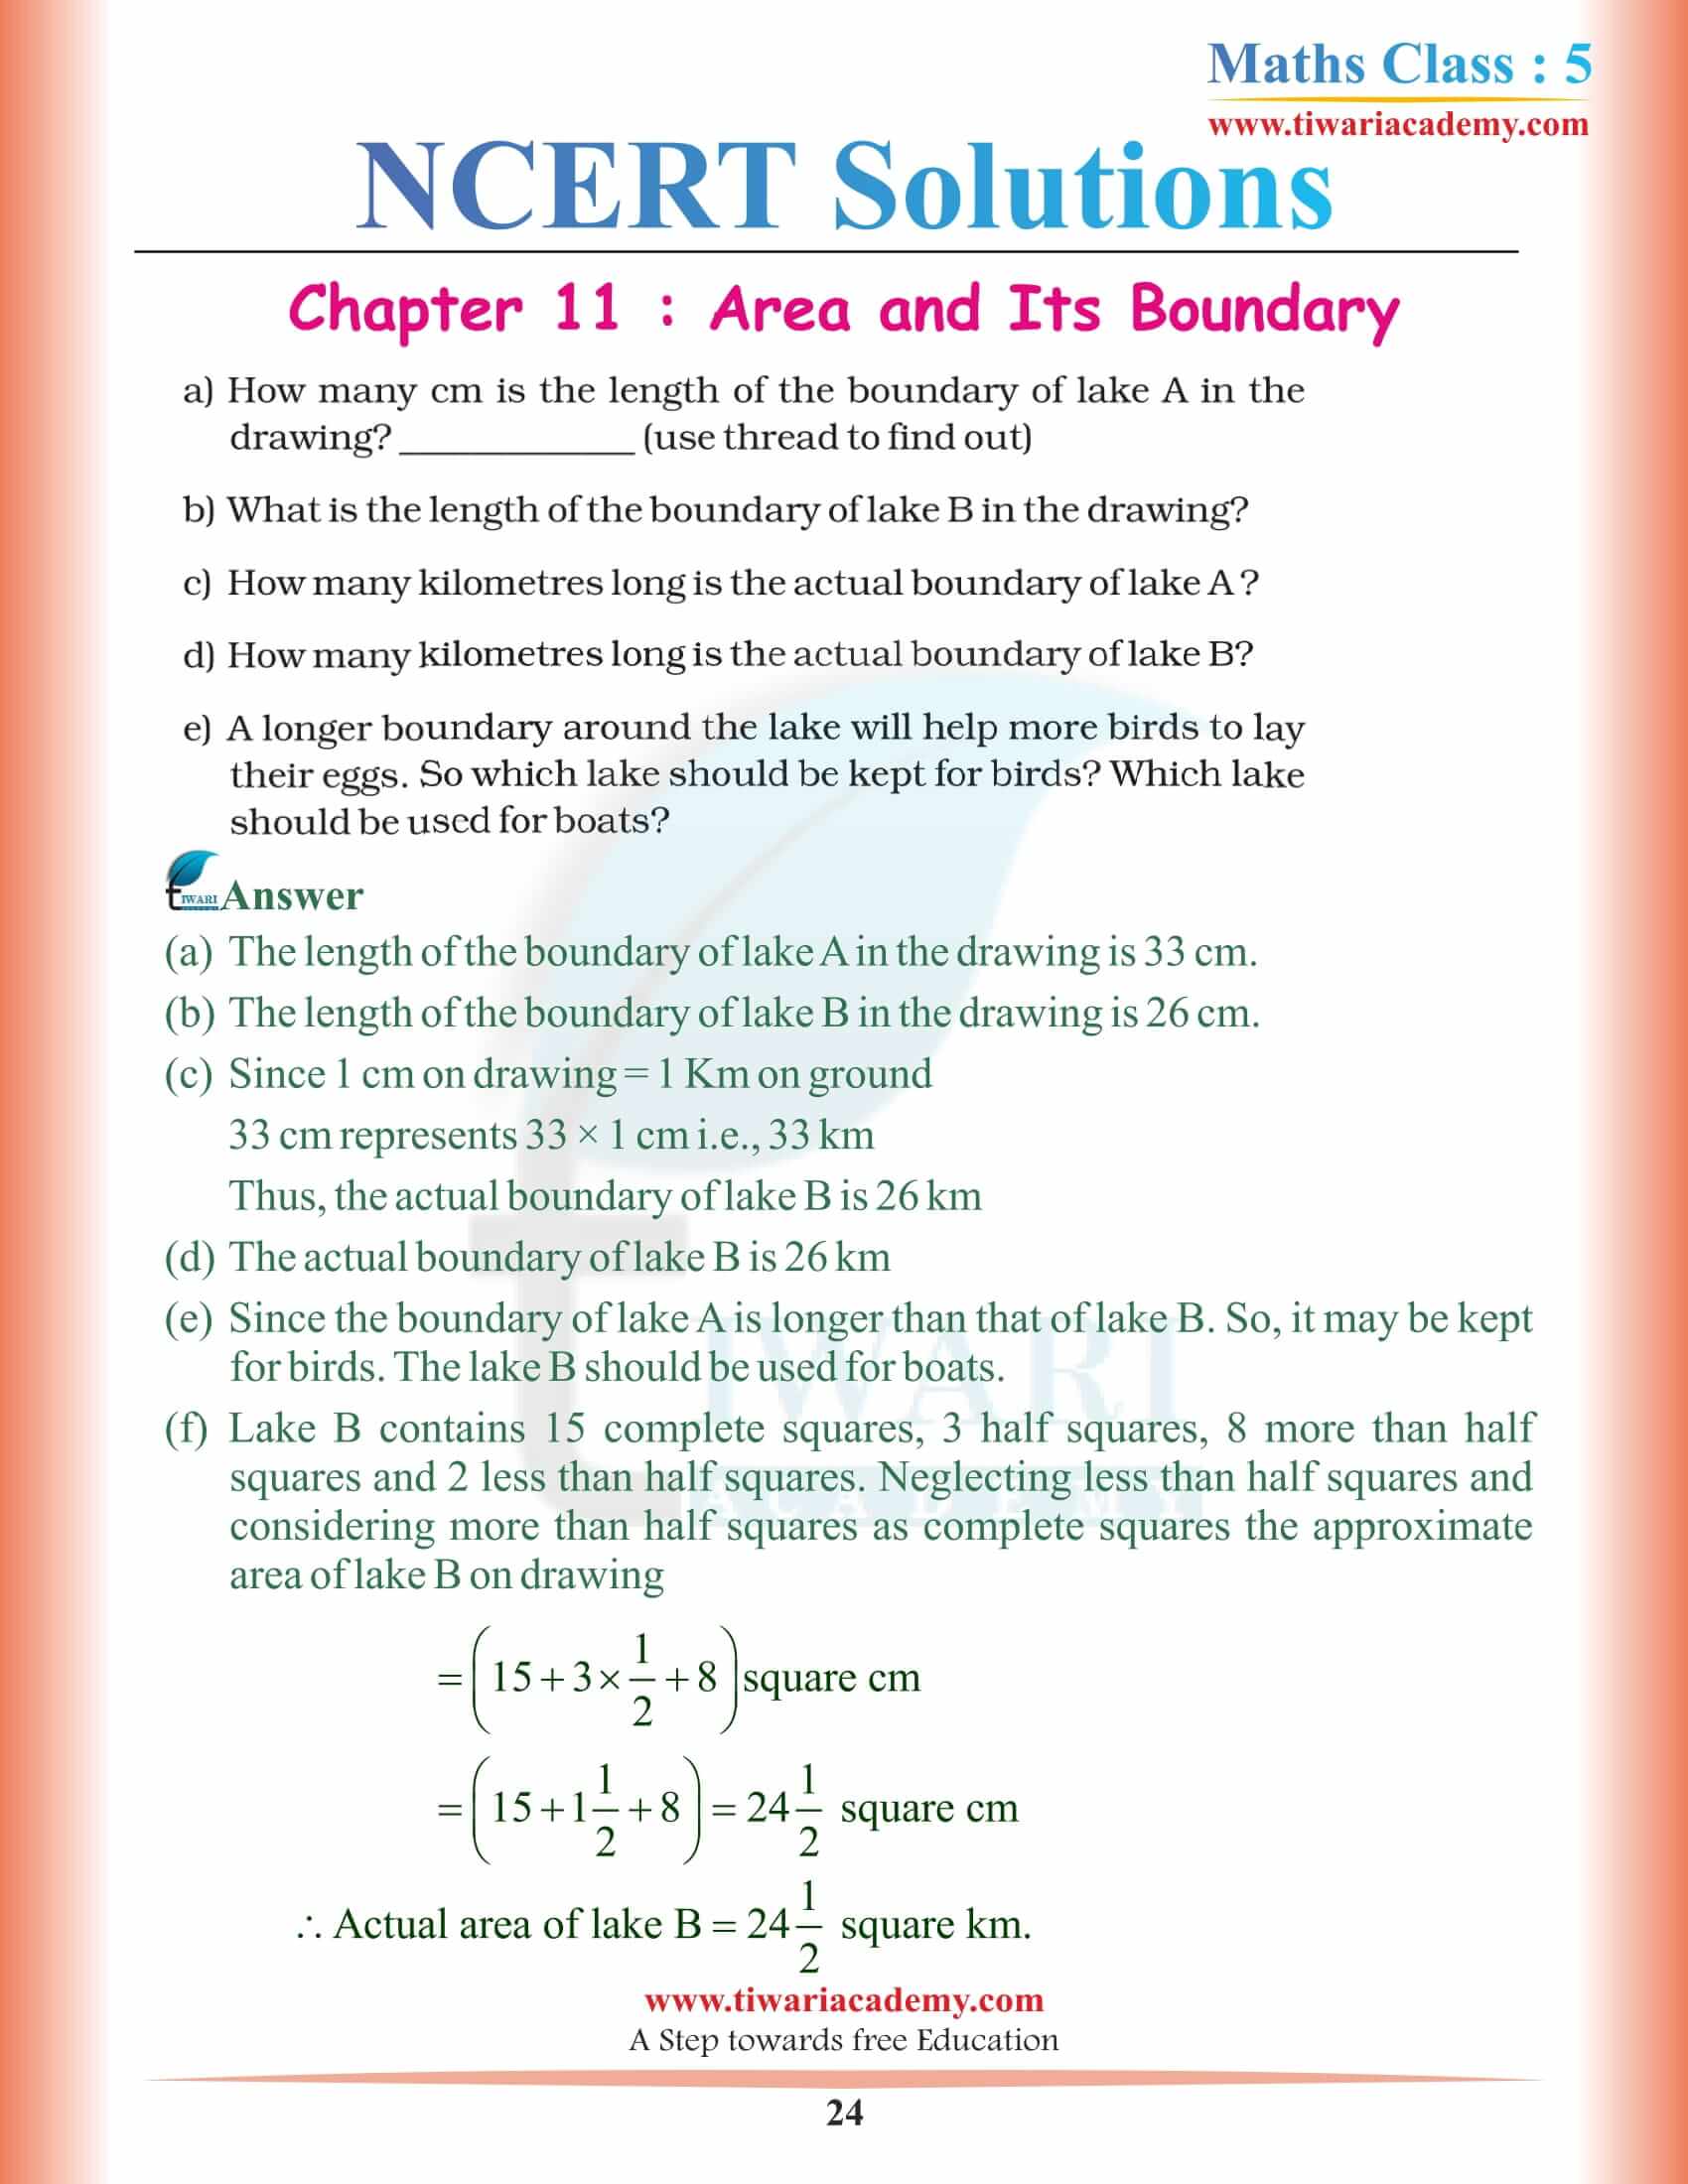 5th Math NCERT Chapter 11 Solutions NCERT PDF